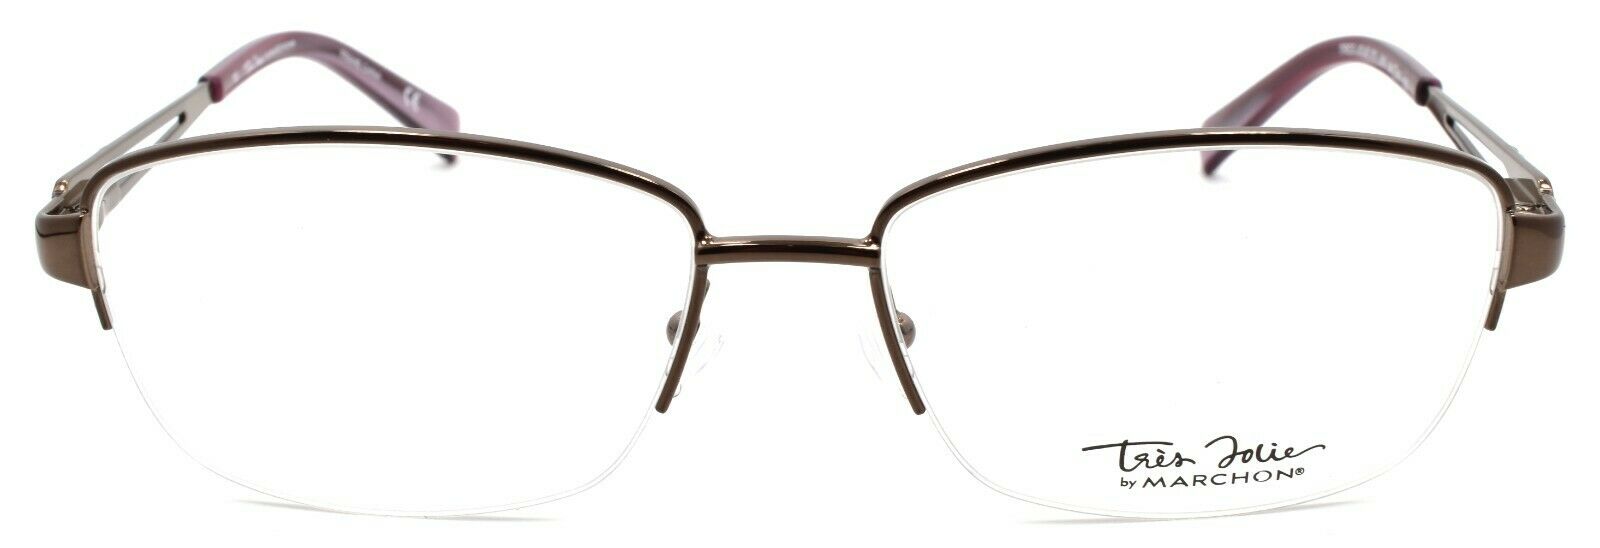 3-Marchon Tres Jolie 171 210 Women's Eyeglasses Frames Half-rim 54-16-135 Brown-886895262903-IKSpecs